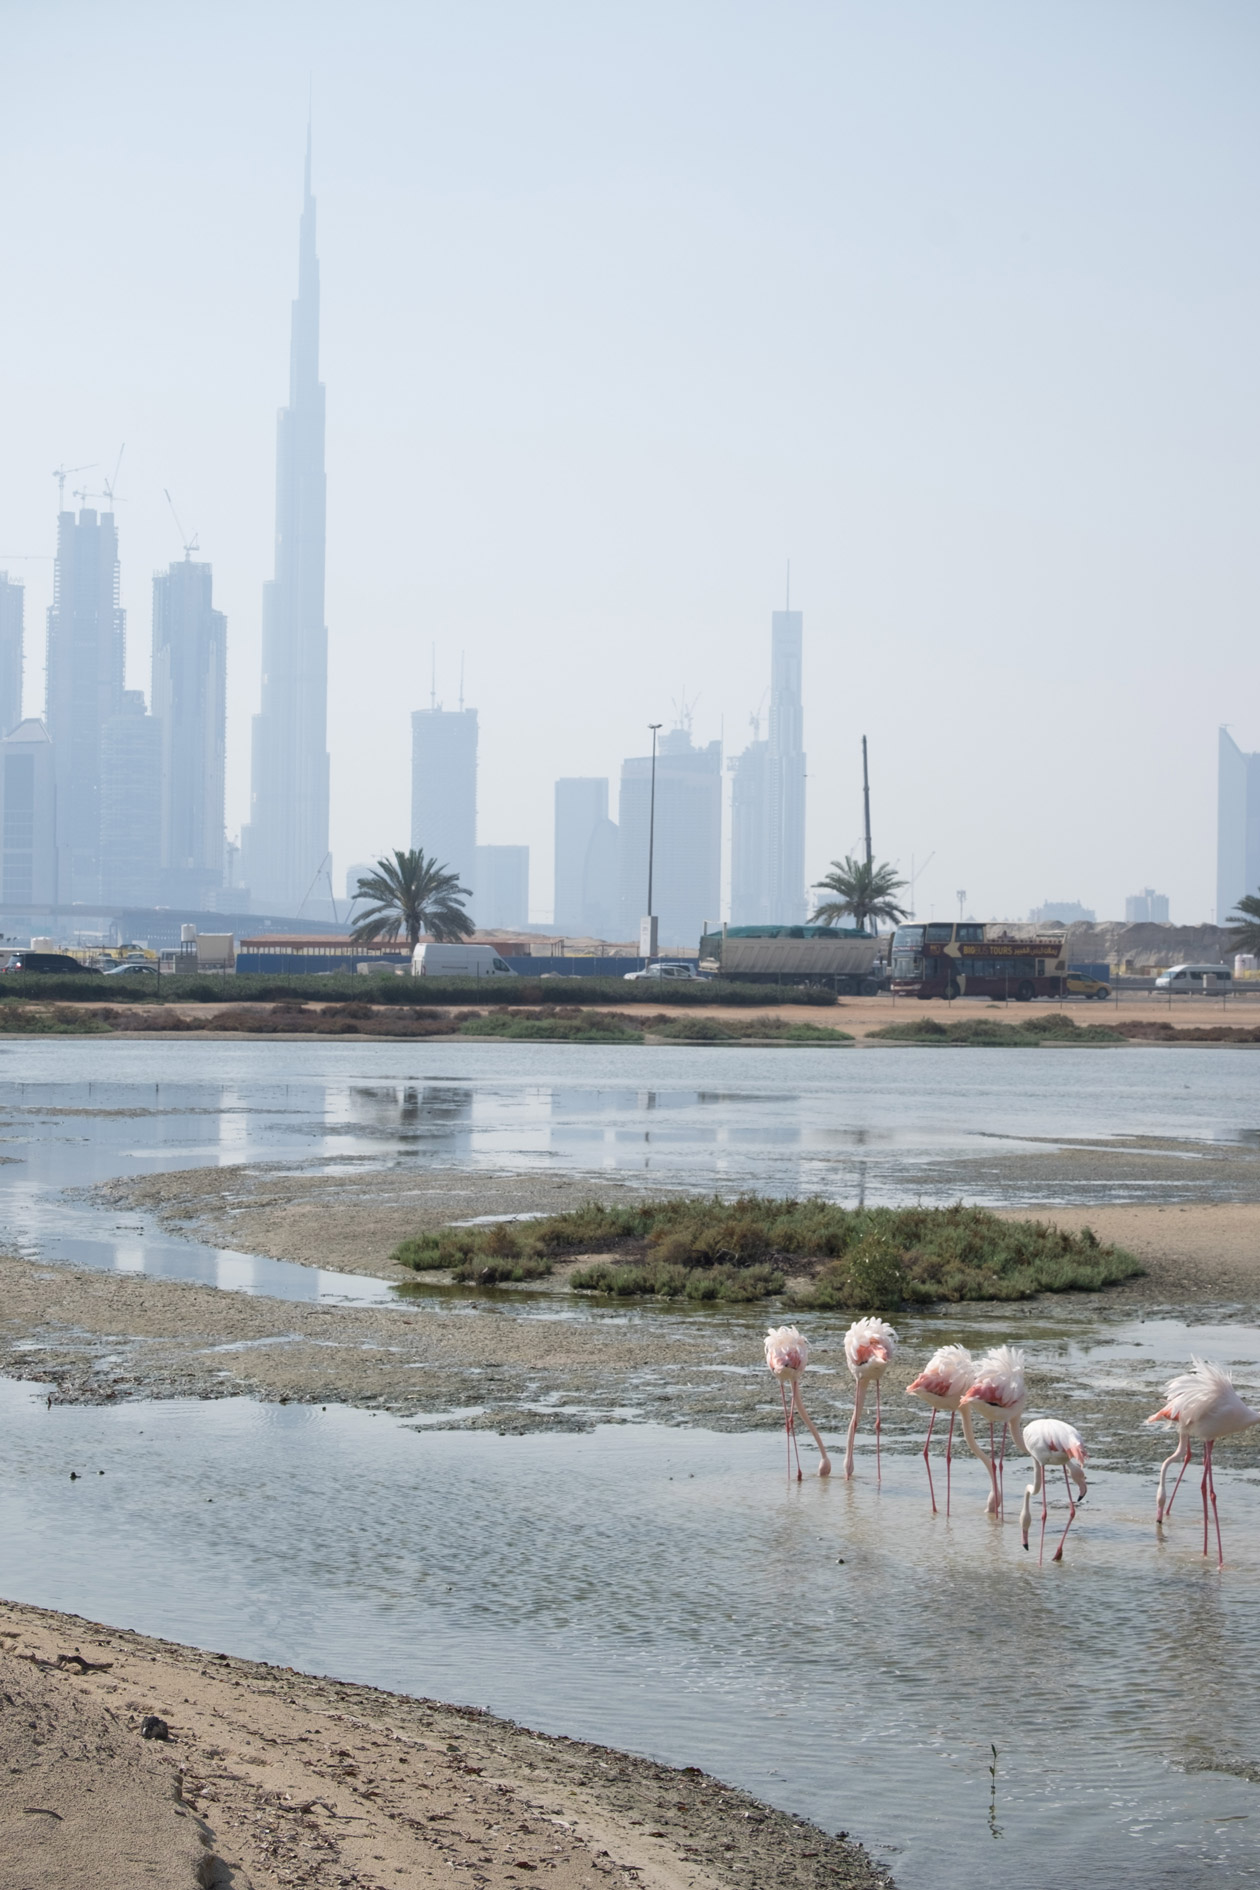 Flamingos at the Ras Al Khor wildlife sanctuary in Dubai, with the Burj Khalifa in the background